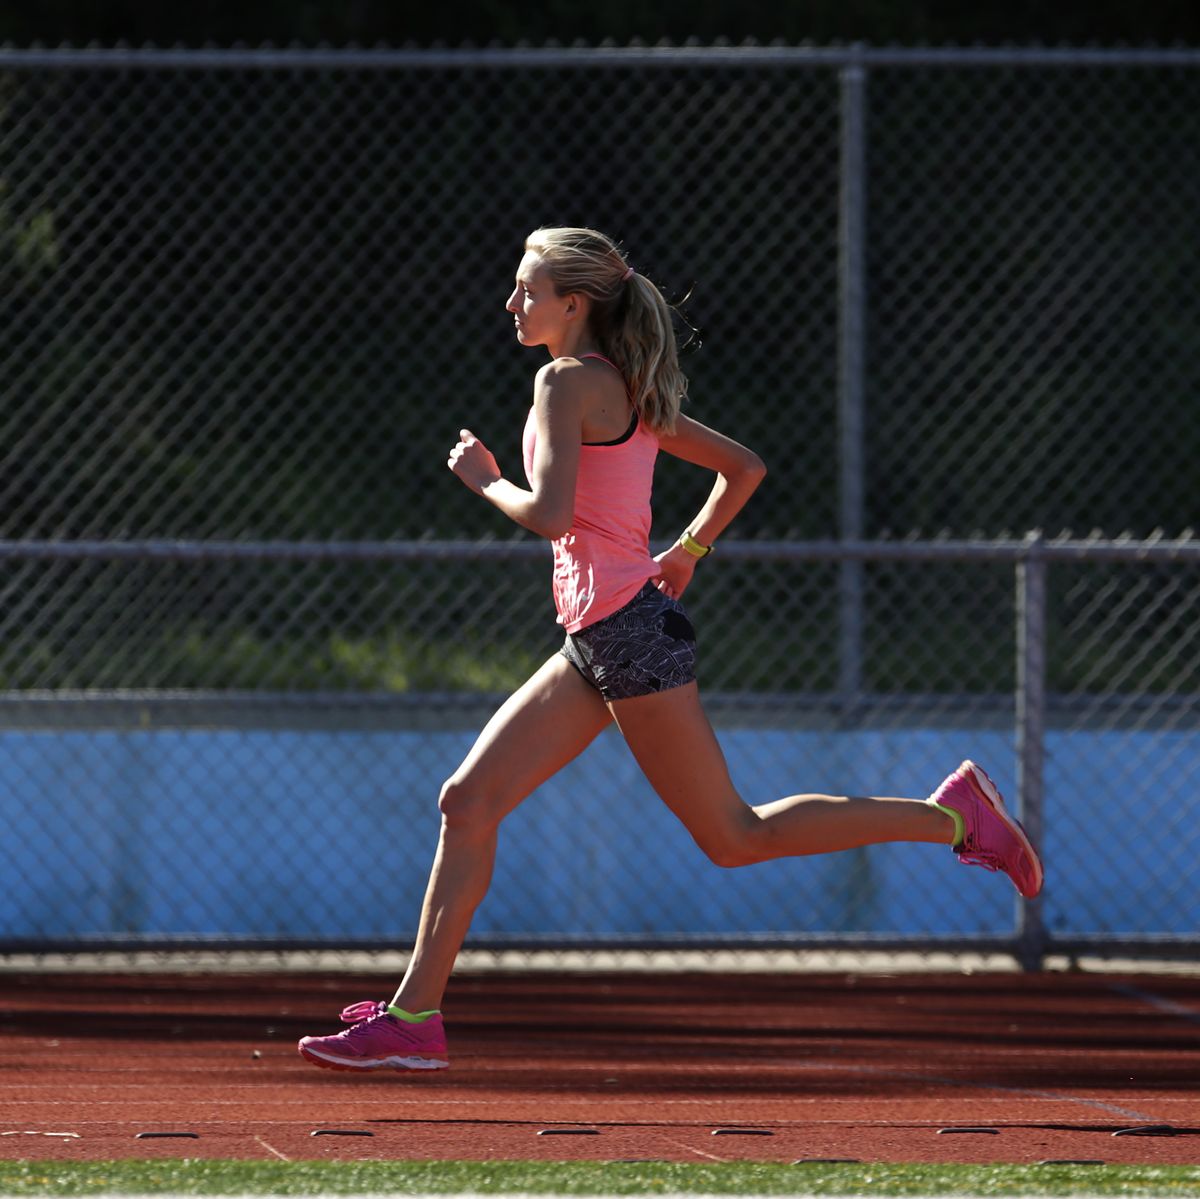 a female athlete runs on a track